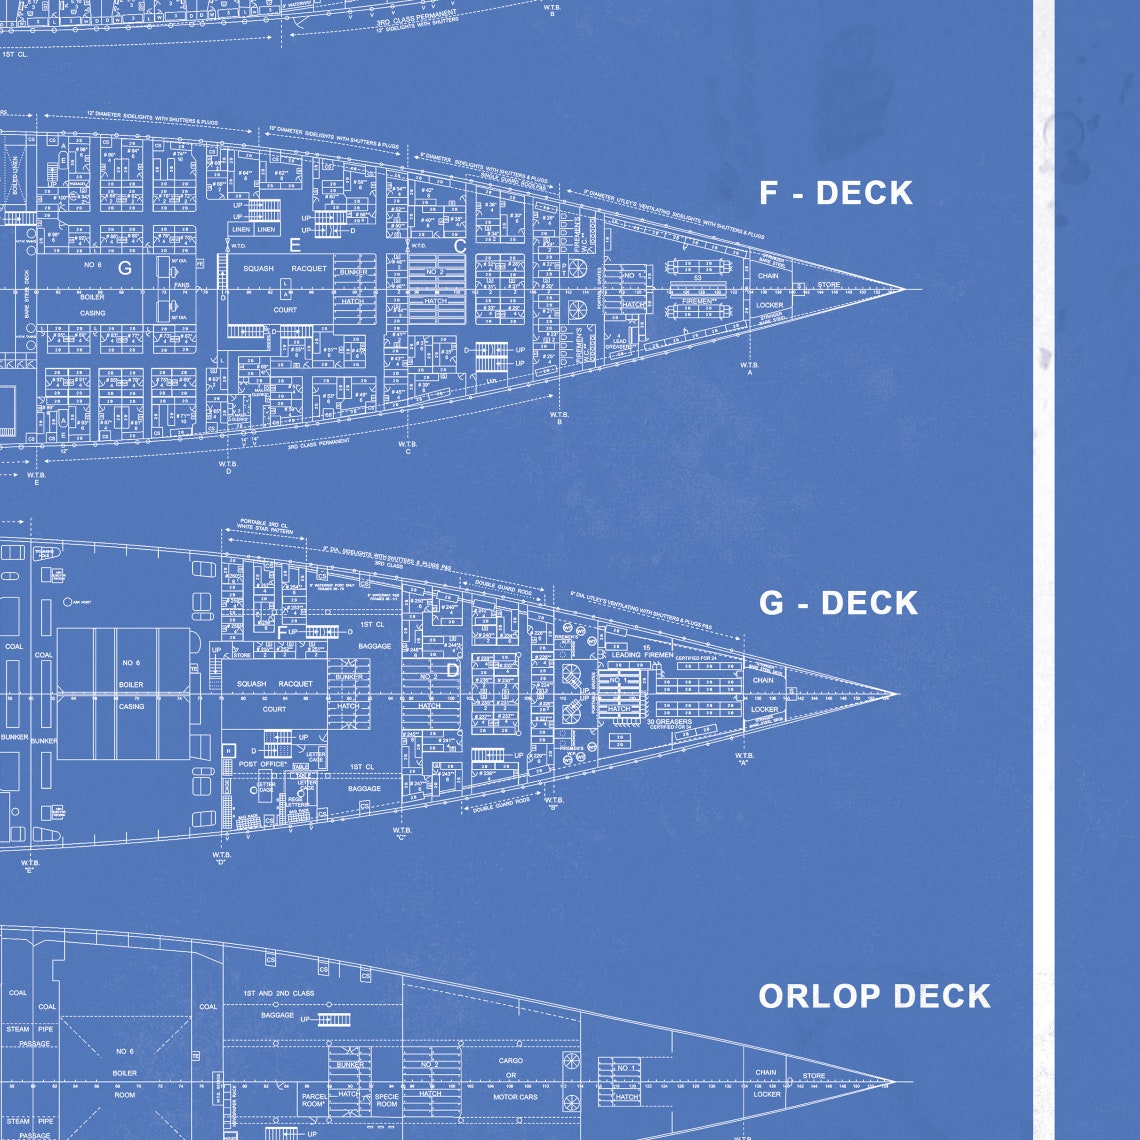 Printable Titanic Blueprints